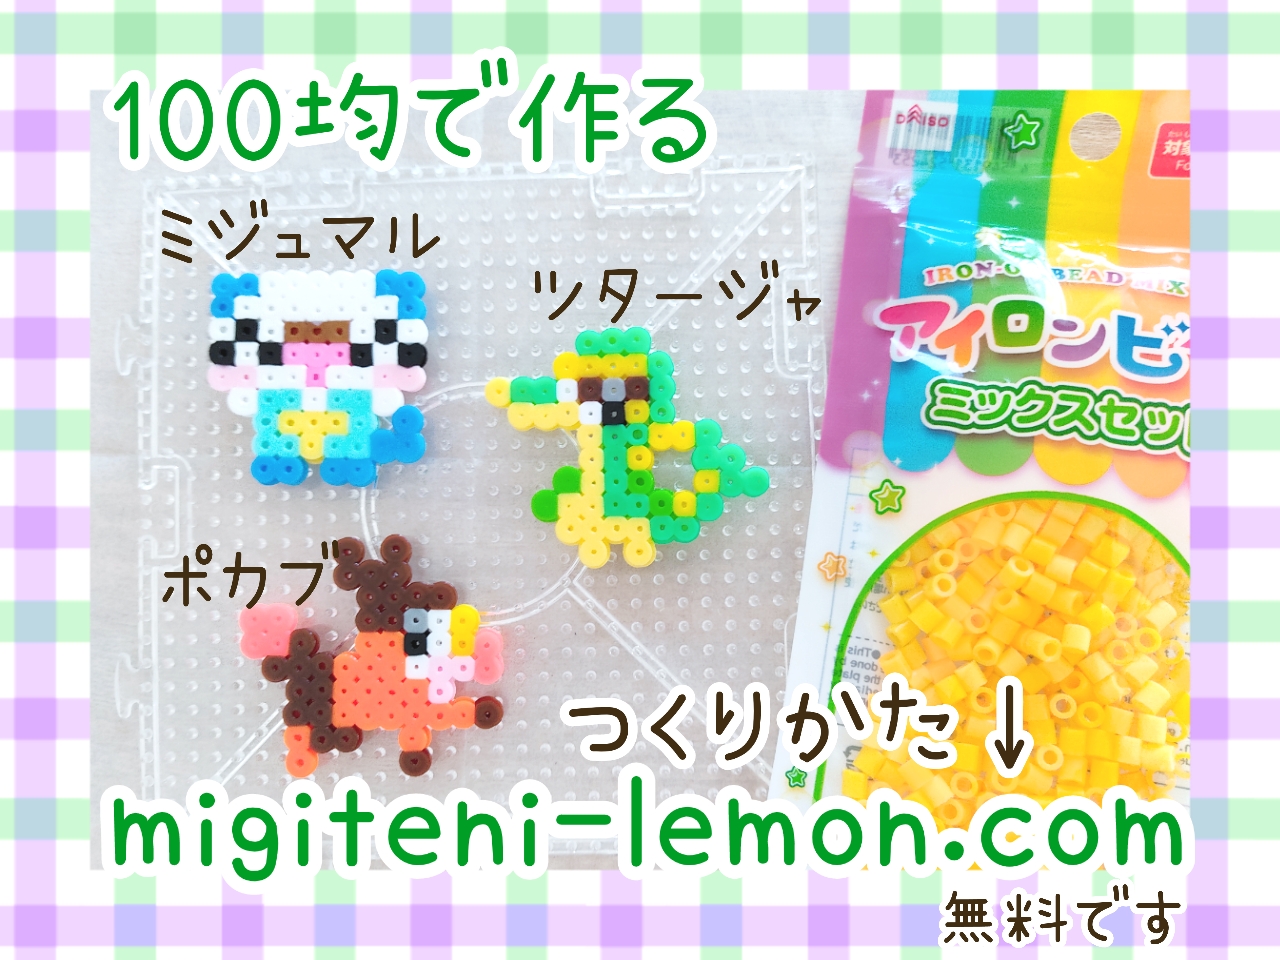 pokabu-tepig-tsutaja-snivy-kawaii-unova-pokemon-handmade-iron-beads-small-free-zuan-daiso-square